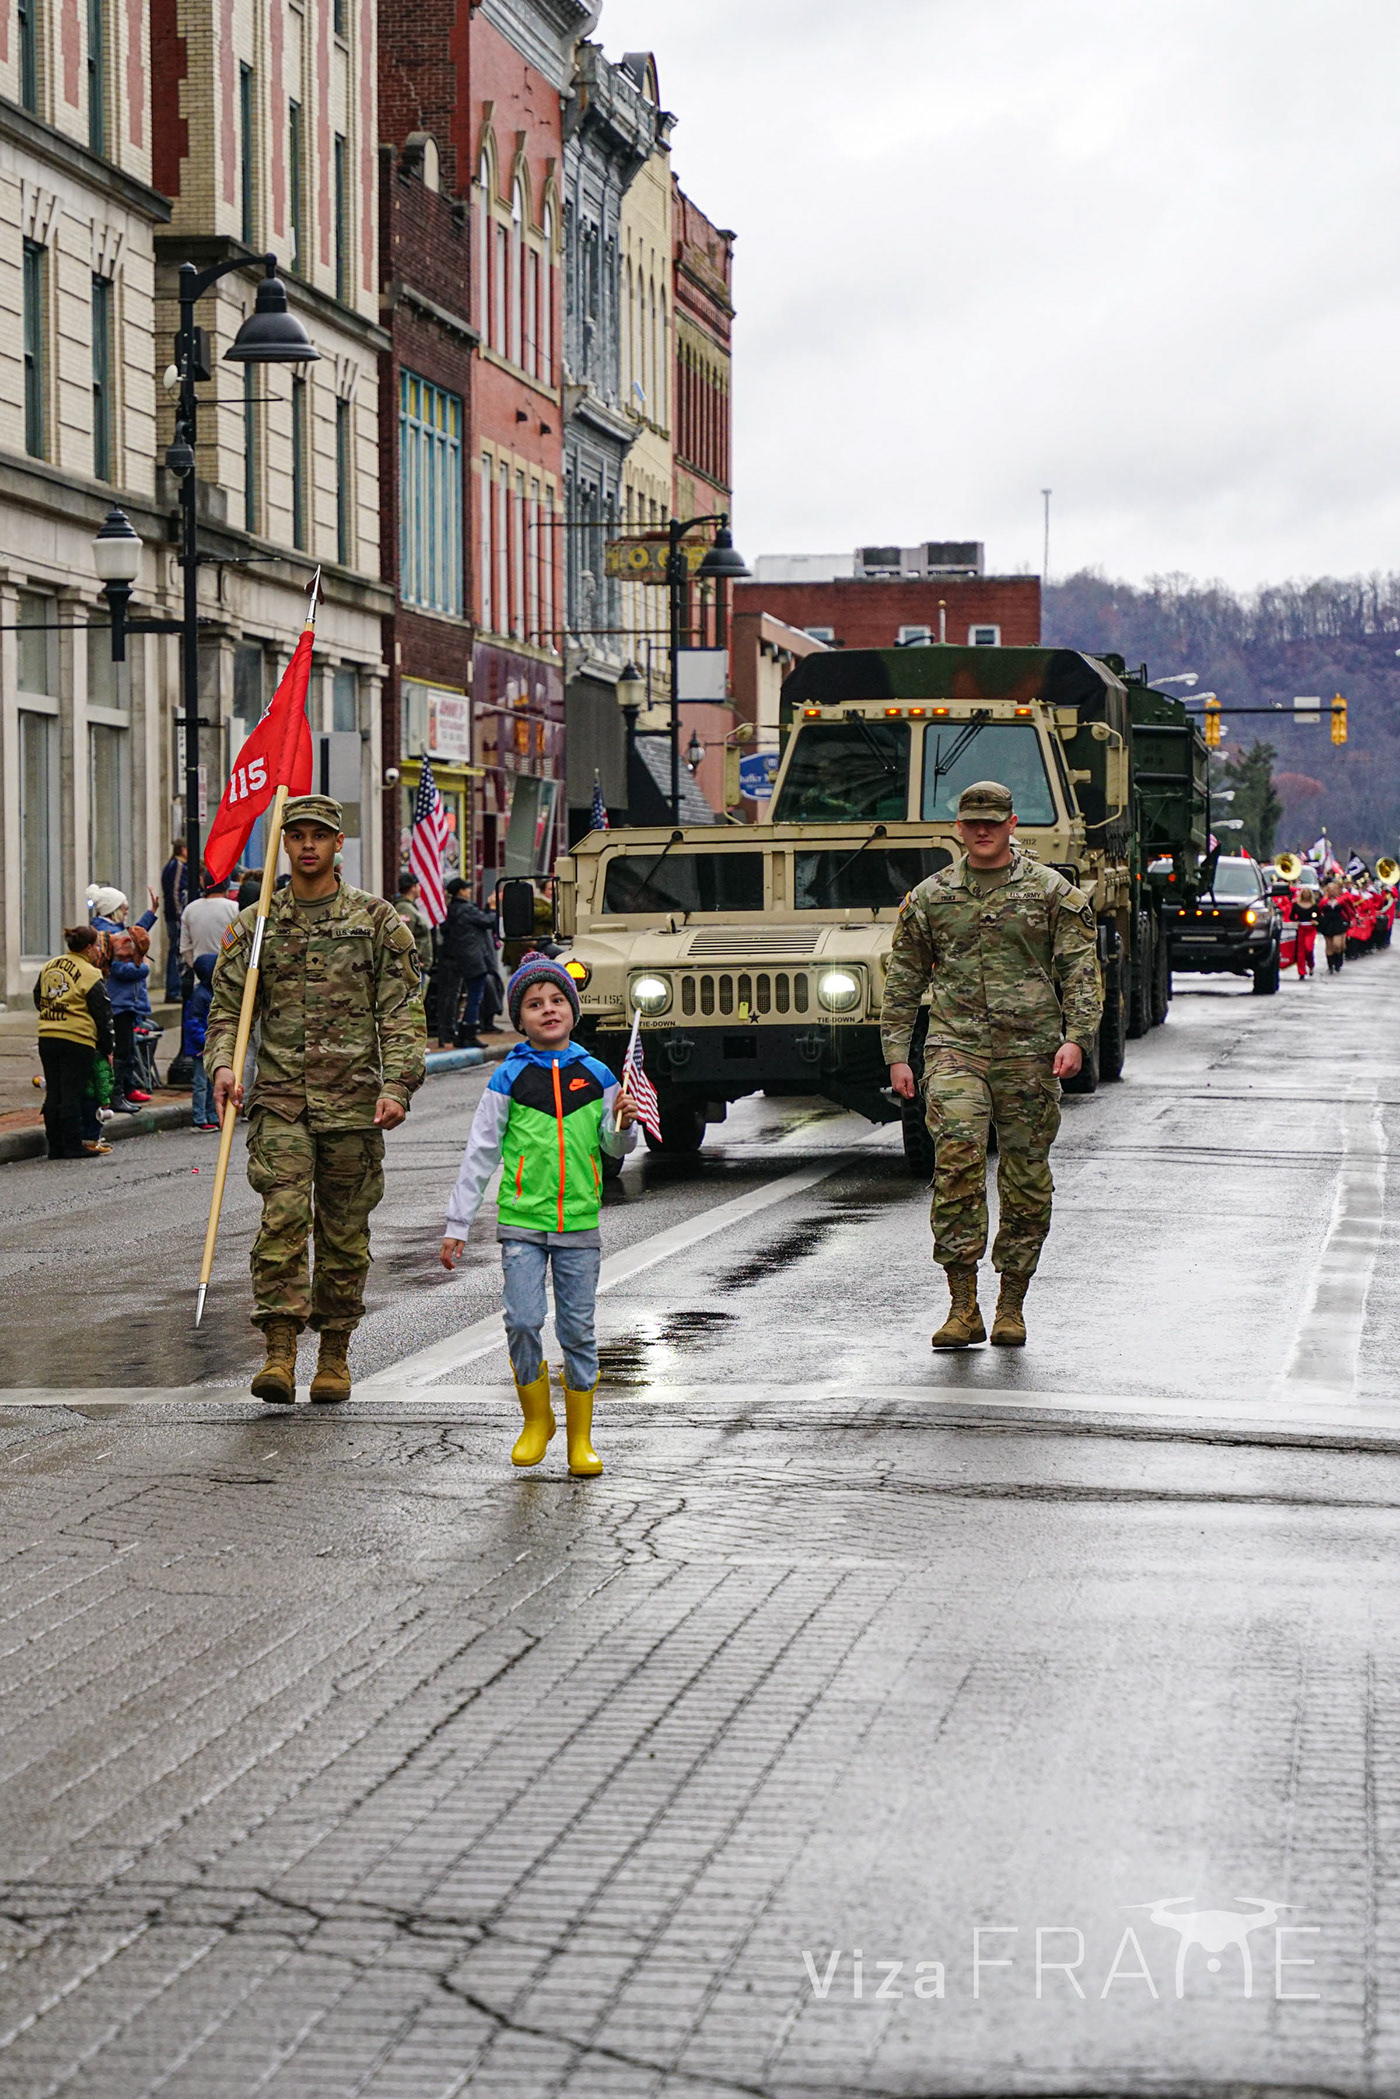 parade veterans Veteran's Day band floats flag patriotic Military Clarksbsurg Clarksburgwv